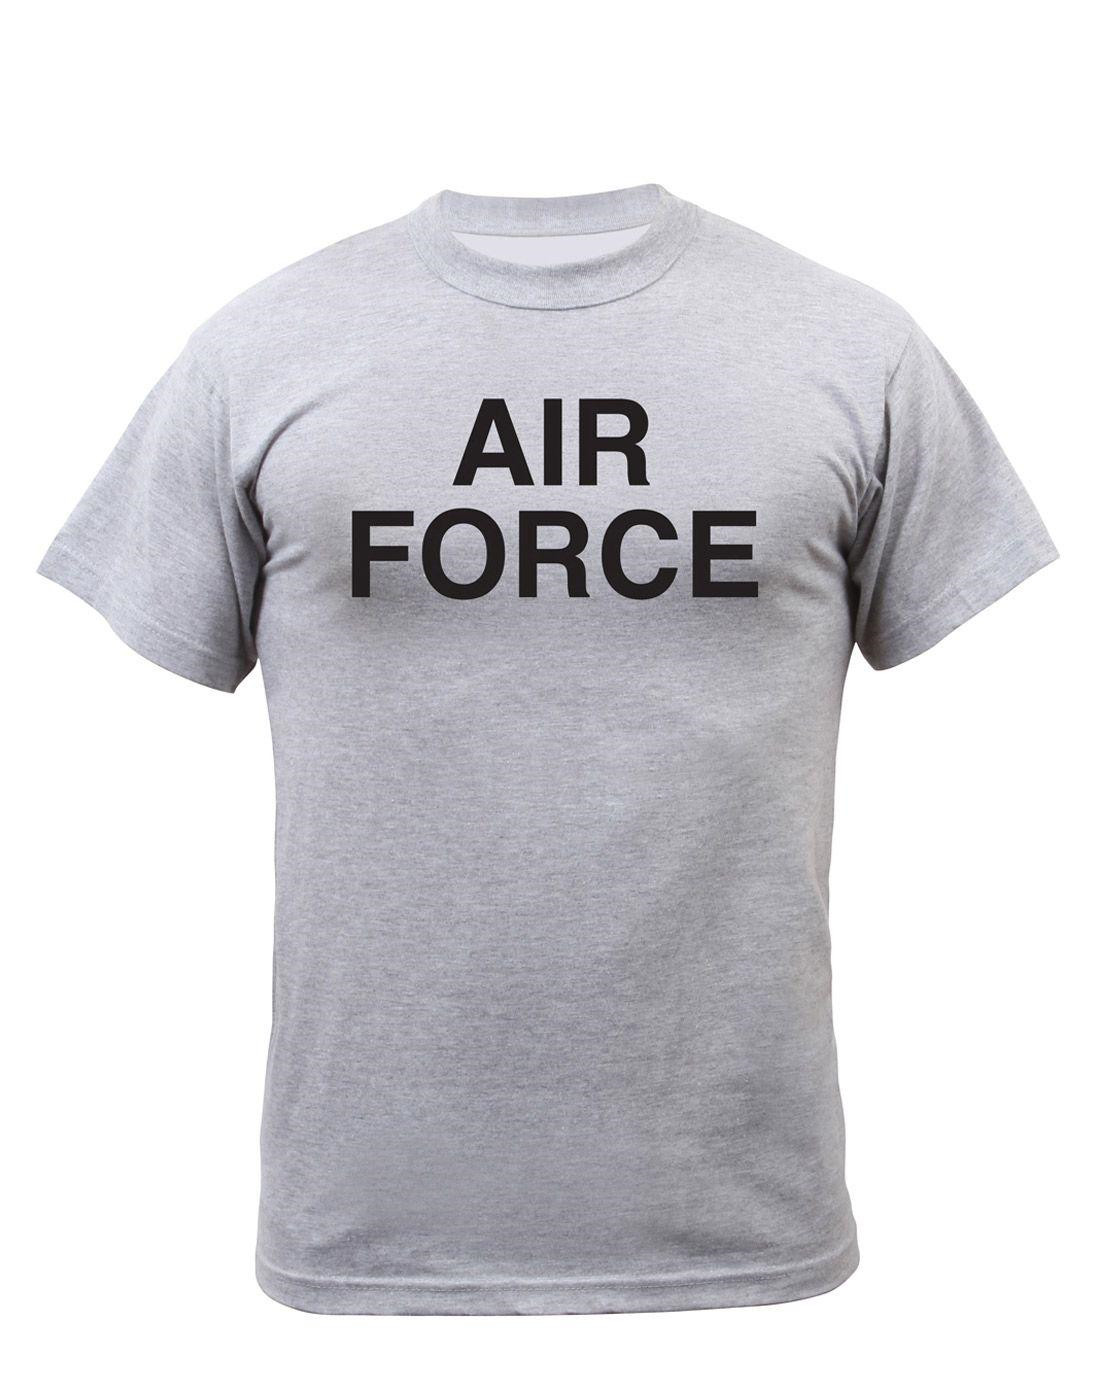 Rothco Physical Training T-shirt - 'ARMY' (Grå m. Air Force, M)